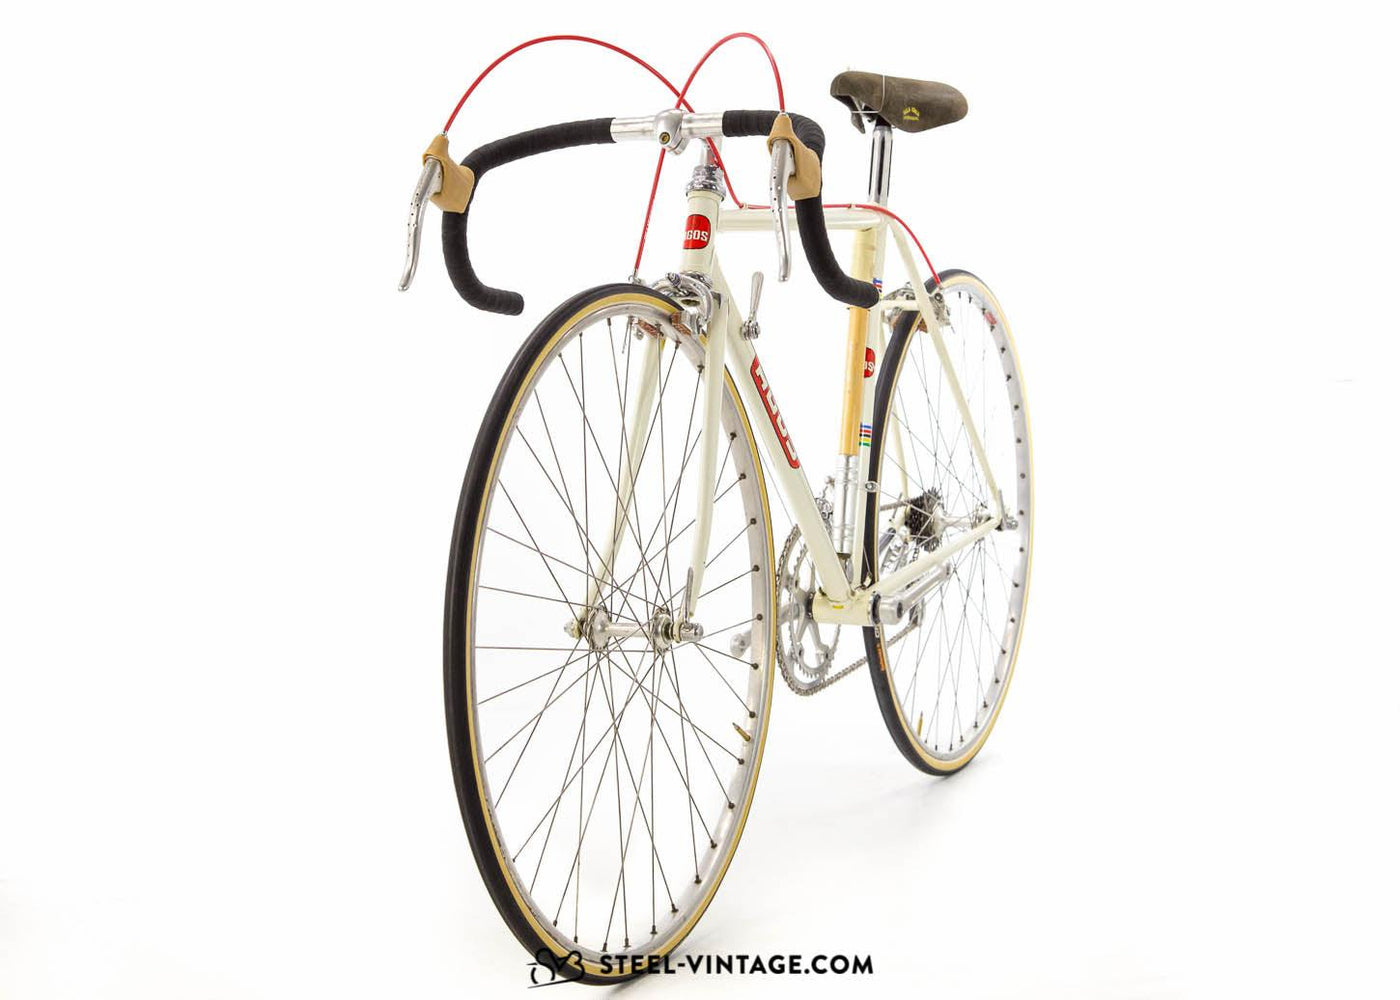 Agos Classic Road Bike 1970s - Steel Vintage Bikes